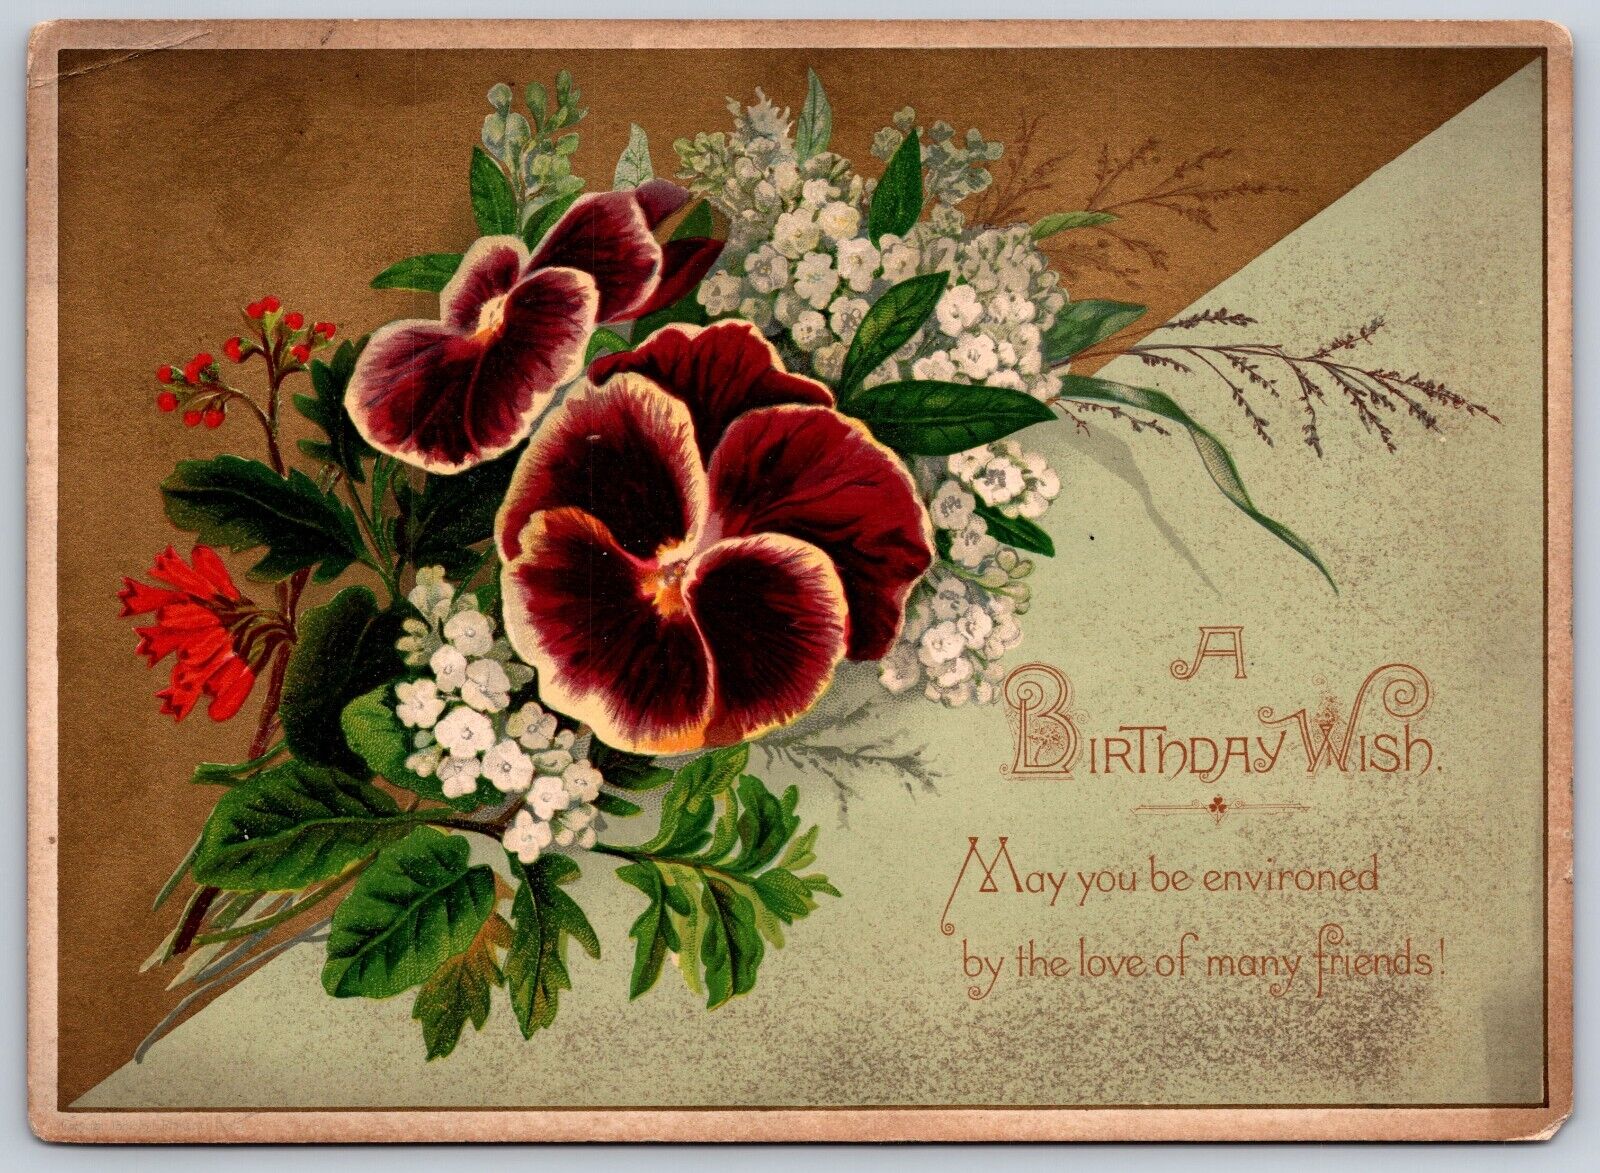 A birthday wish Victorian era birthday card